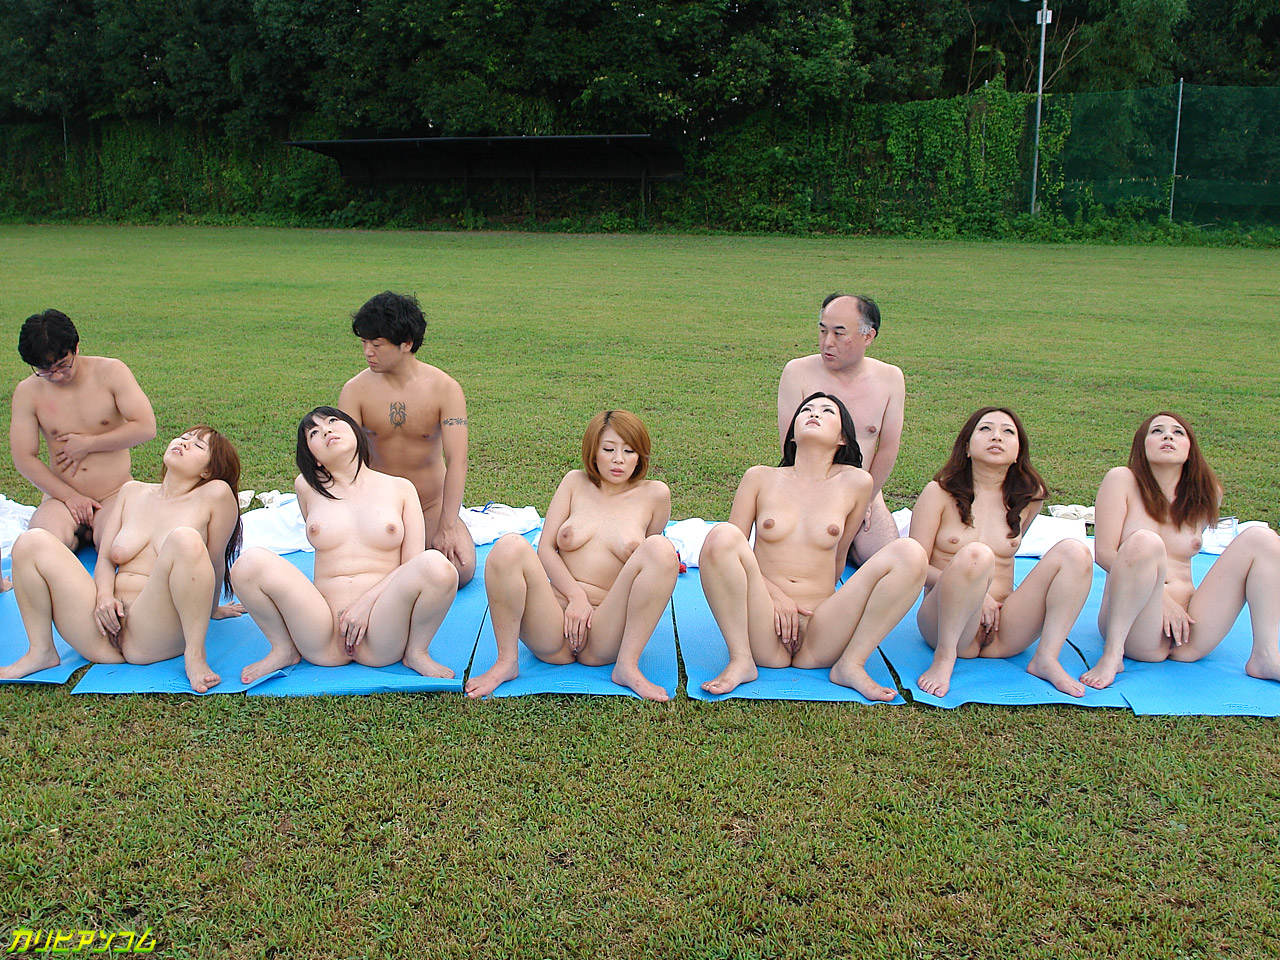 Kinky Asian girls tease with their asses and get rammed in an outdoor session porno fotoğrafı #423605775 | Caribbeancom Pics, Ai, Ami, Eri, Kohaku, Maeshima, Makino, Miyazaki, Mizushima, Murase, Reira, Sawakita, Serikawa, Uta, Yuka, Yuma, Japanese, mobil porno